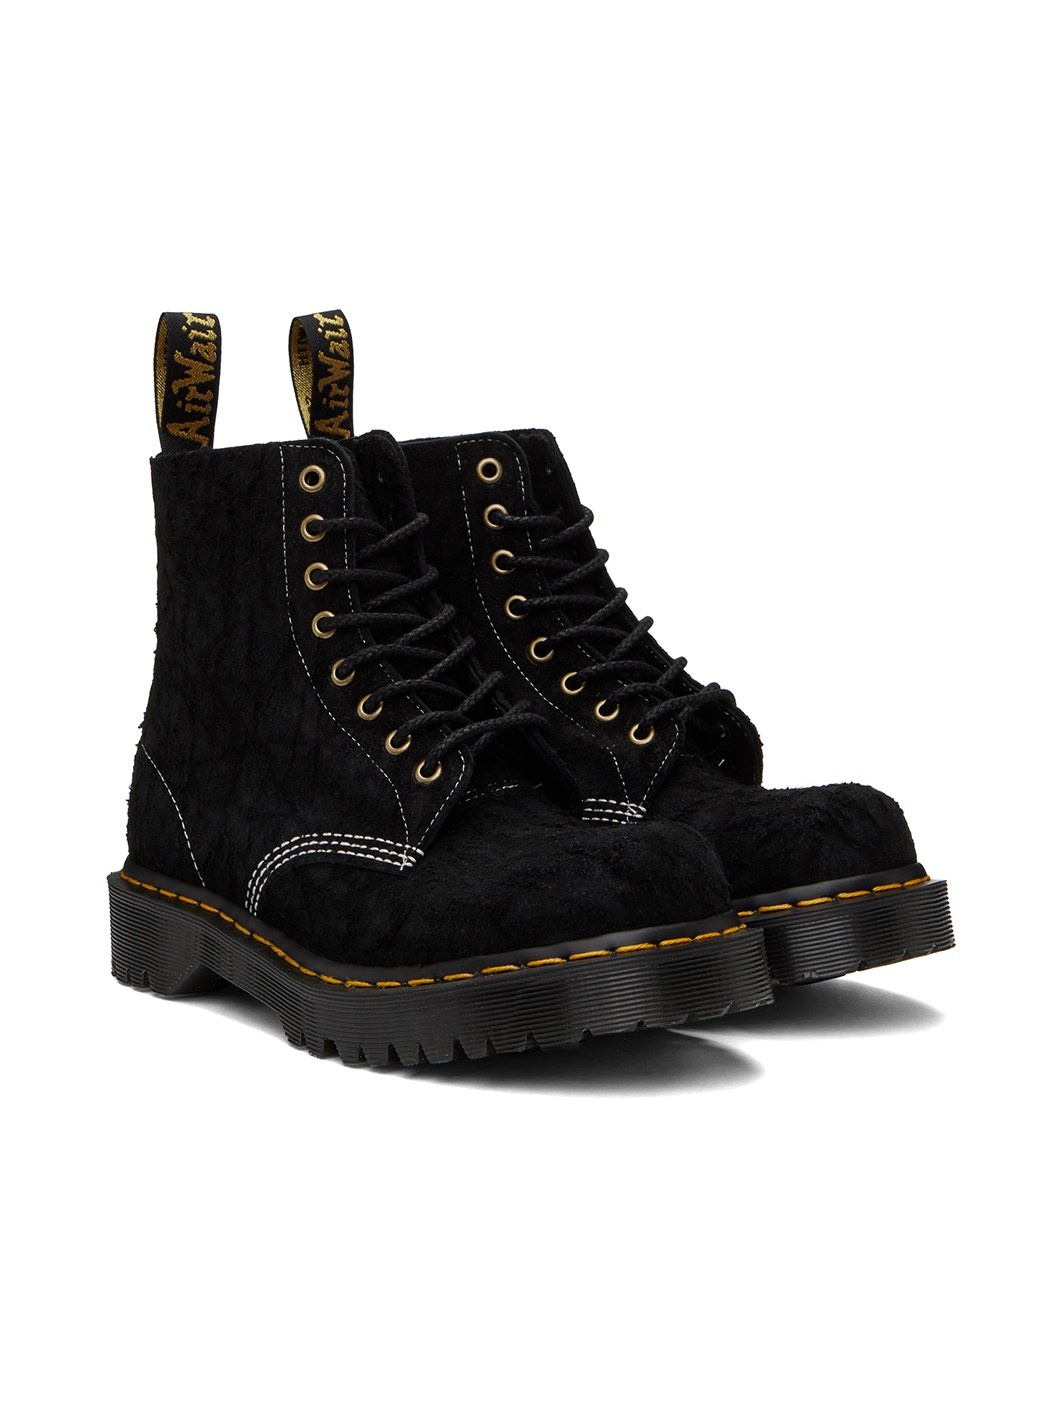 Black 1460 Pascal Bex Boots - 4